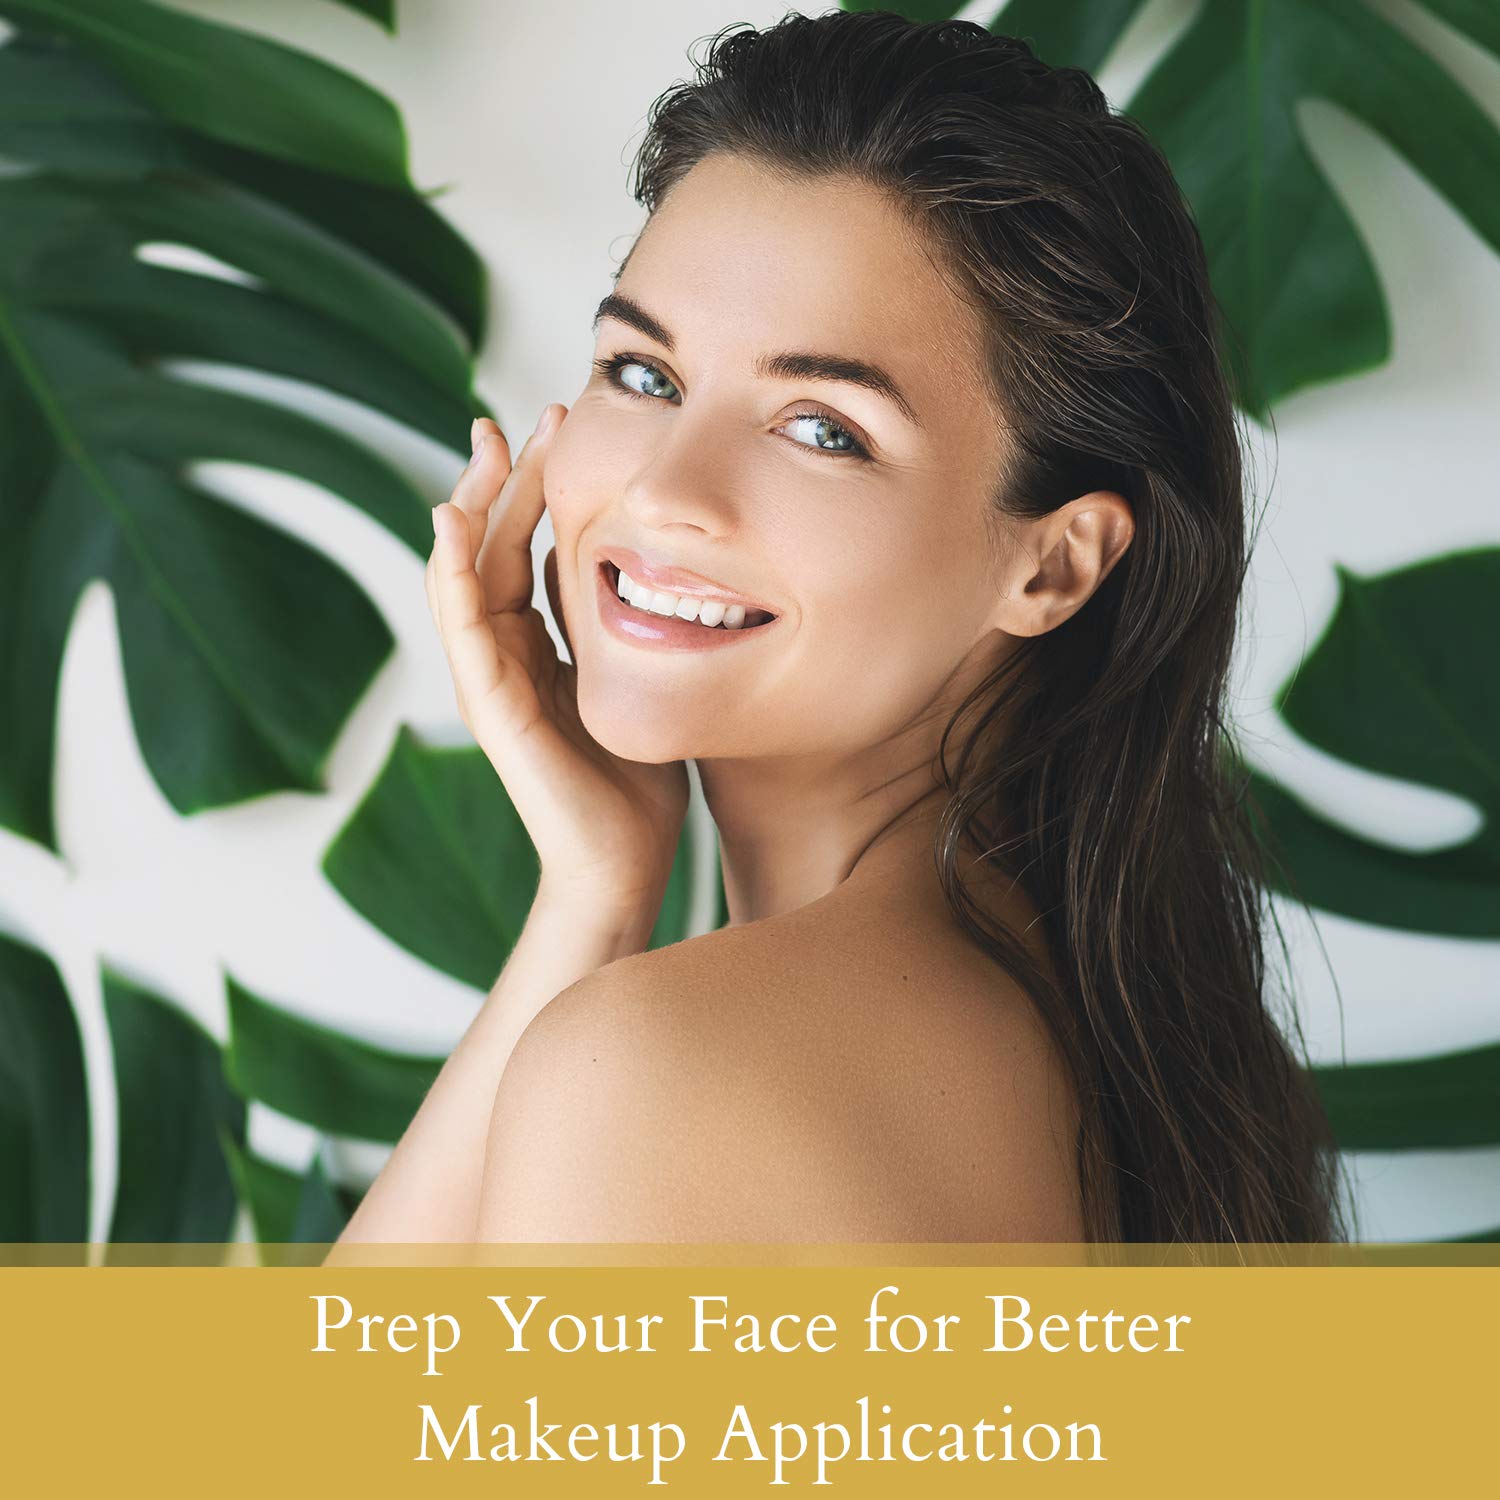  Borghese Prima Viso Face Primer - Makeup Primer For Face - 1.7 FL Oz